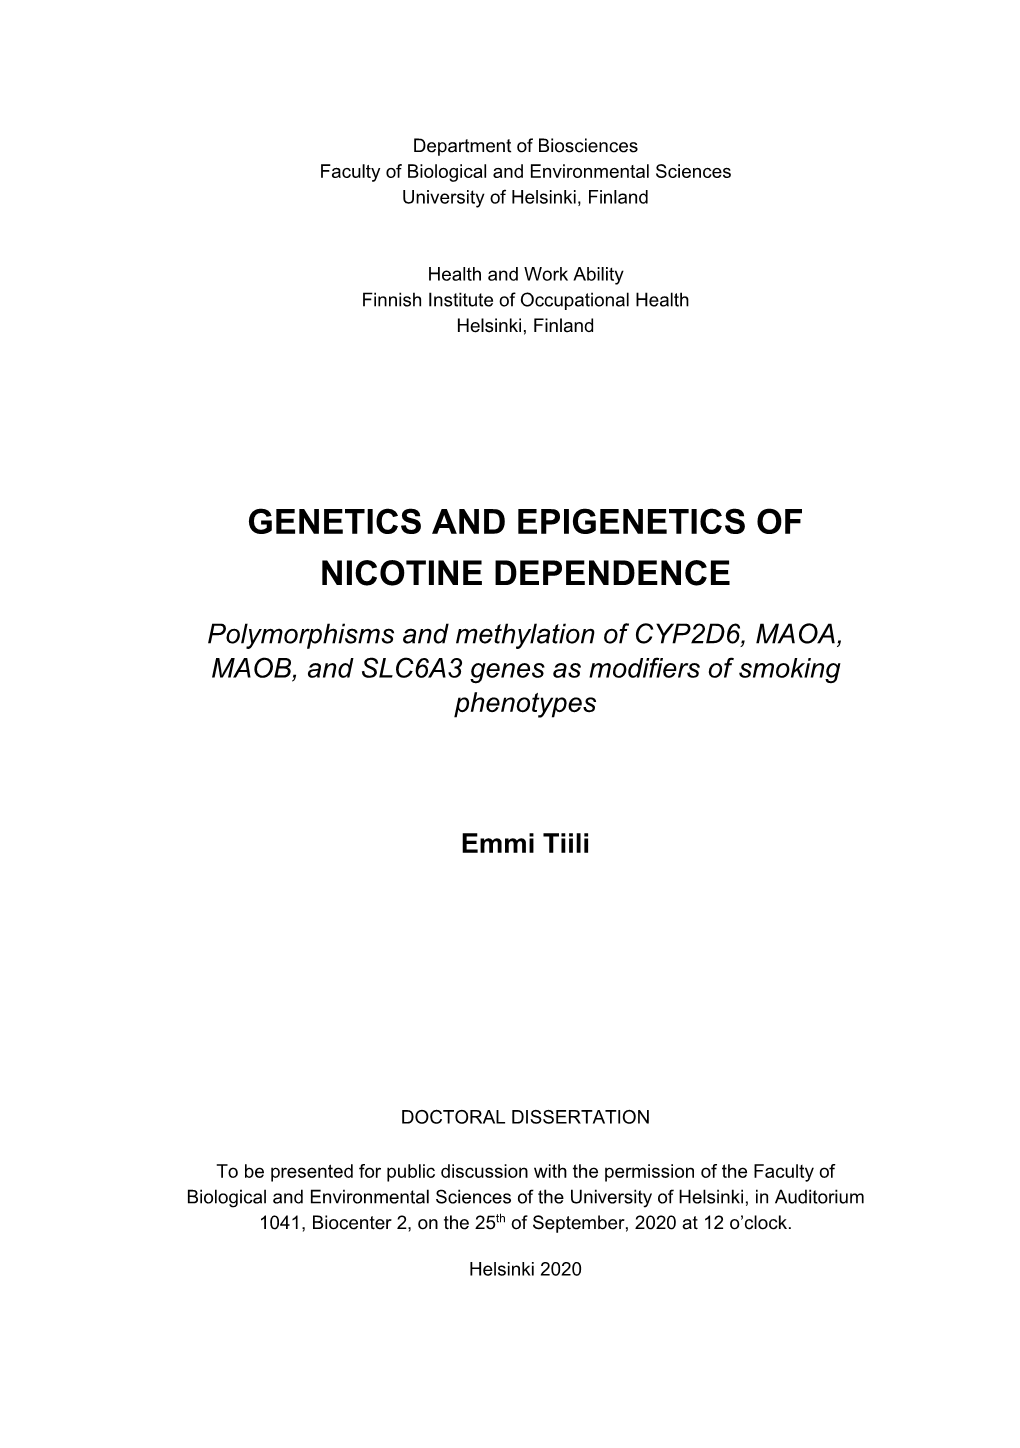 Genetics and Epigenetics of Nicotine Dependence